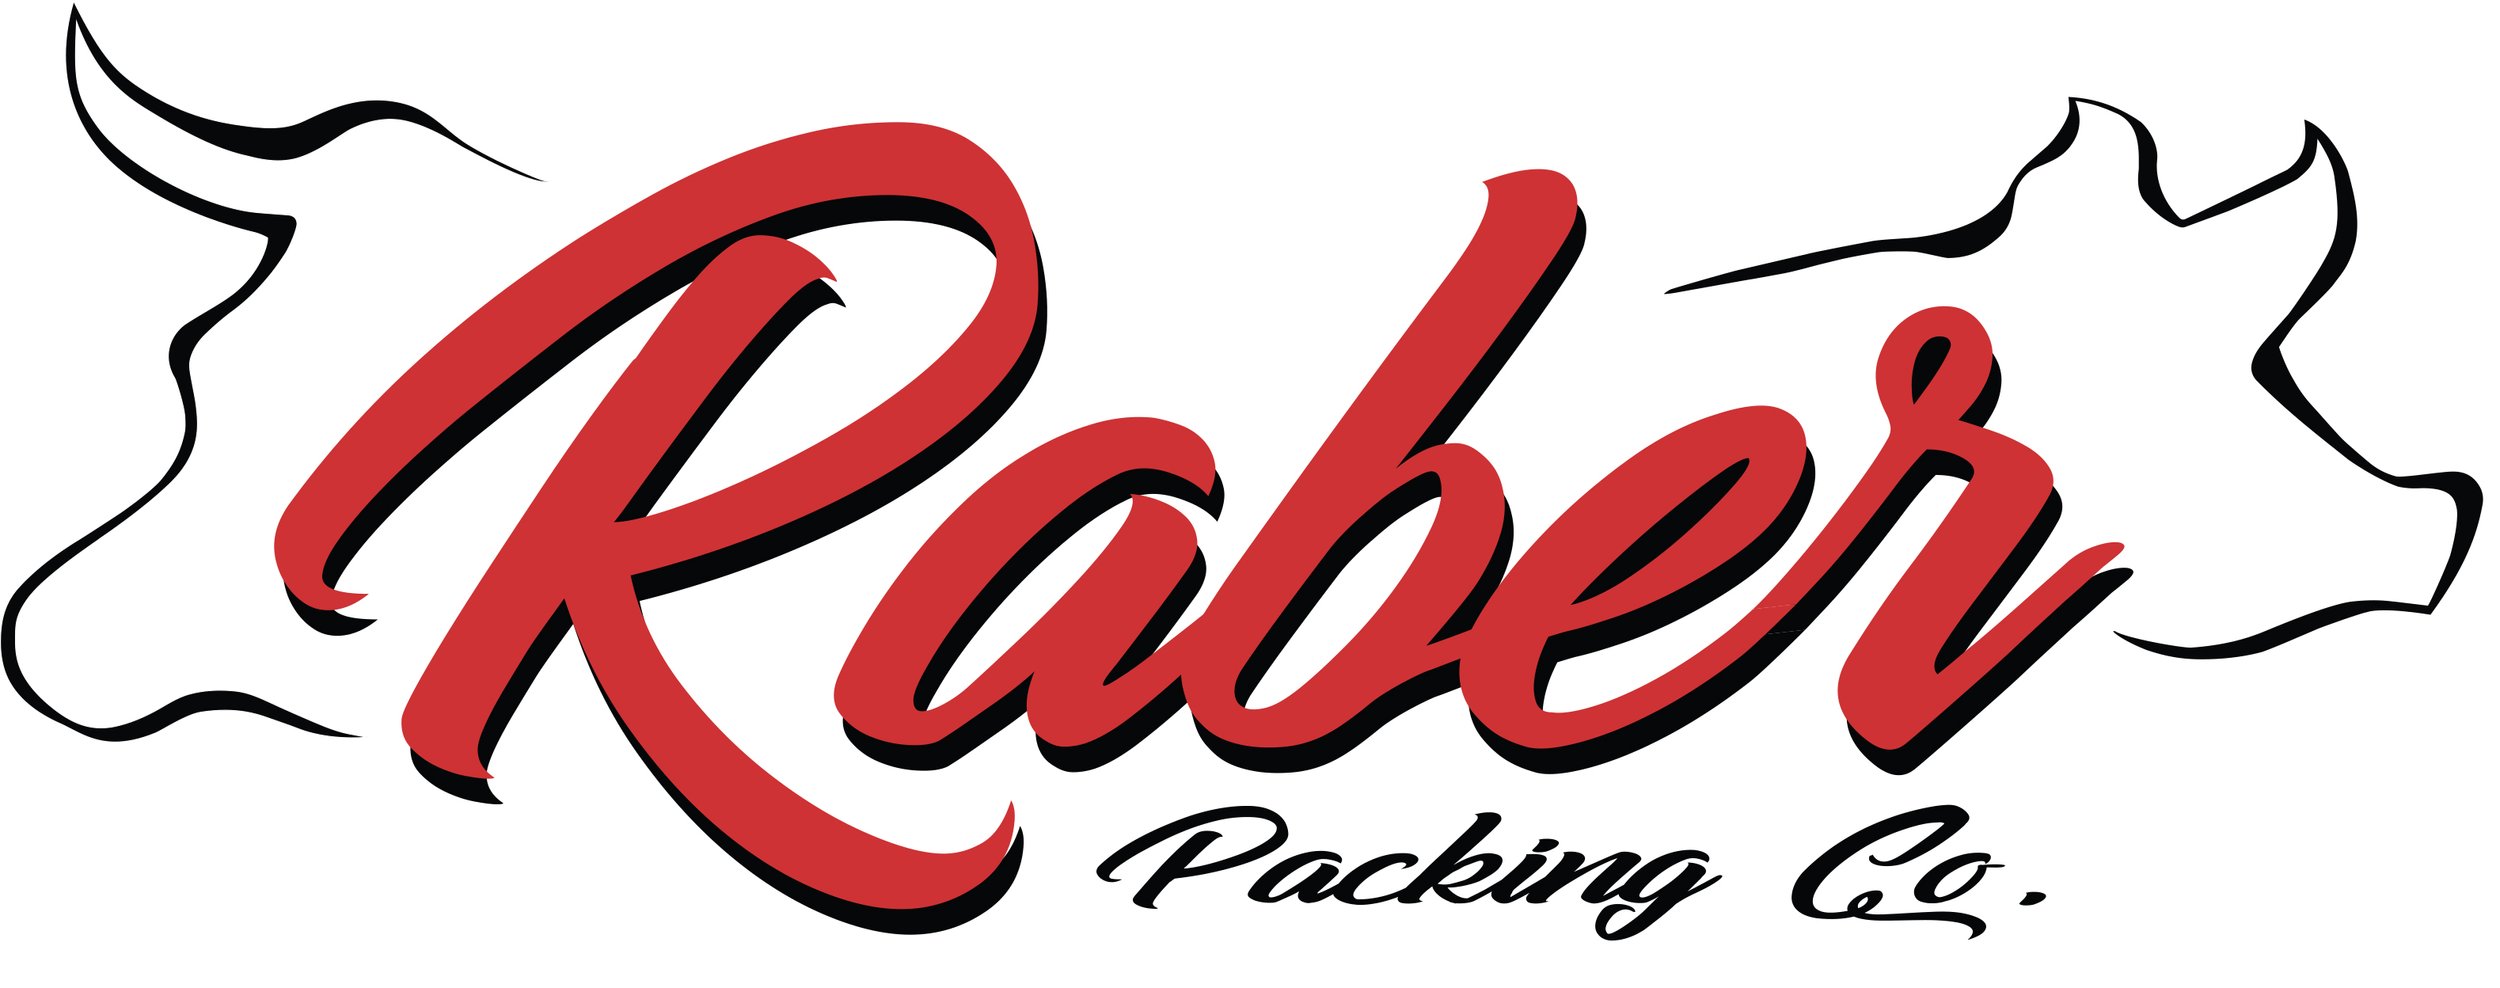 Raber logo 2022 red black copy.jpg